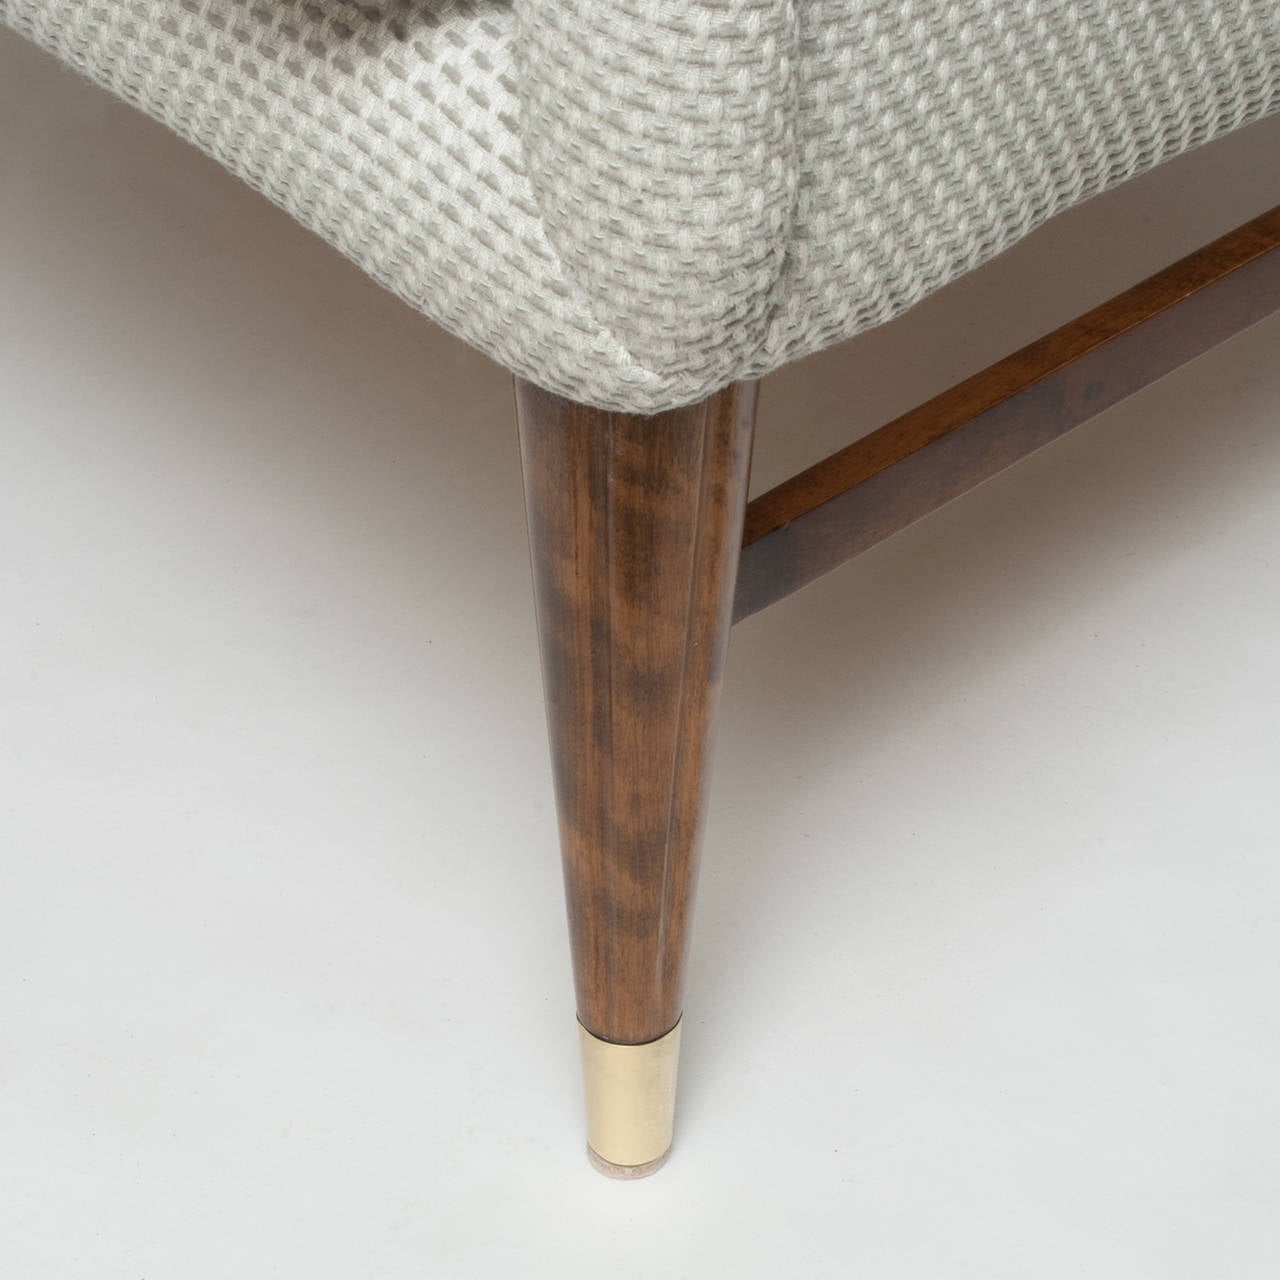 20th Century Pair of Sleek Swedish Mid-Century Upholstered Armchairs.